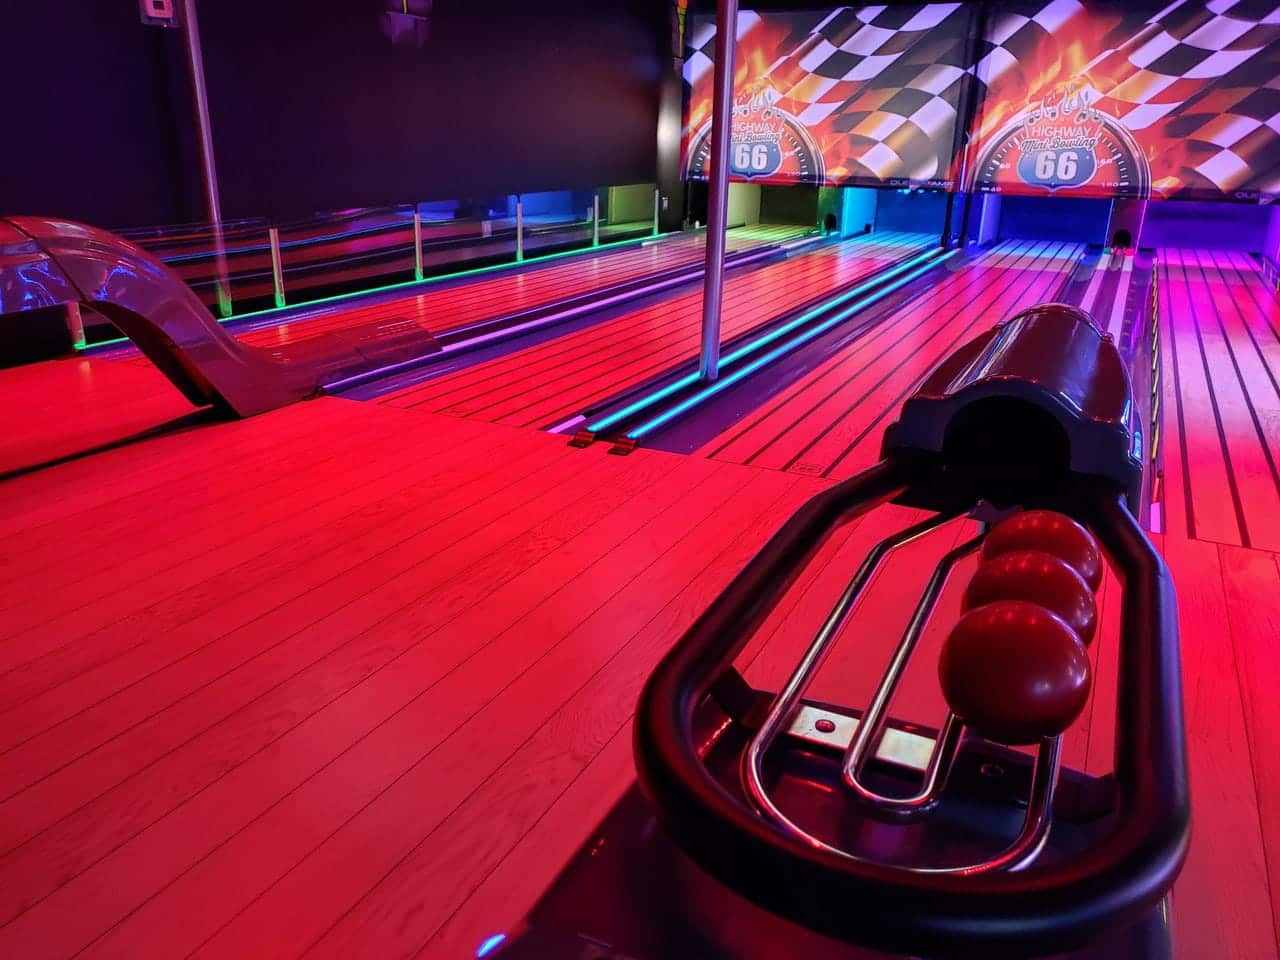 Glow-in-the-dark mini bowling lanes at Monster Mini Golf.